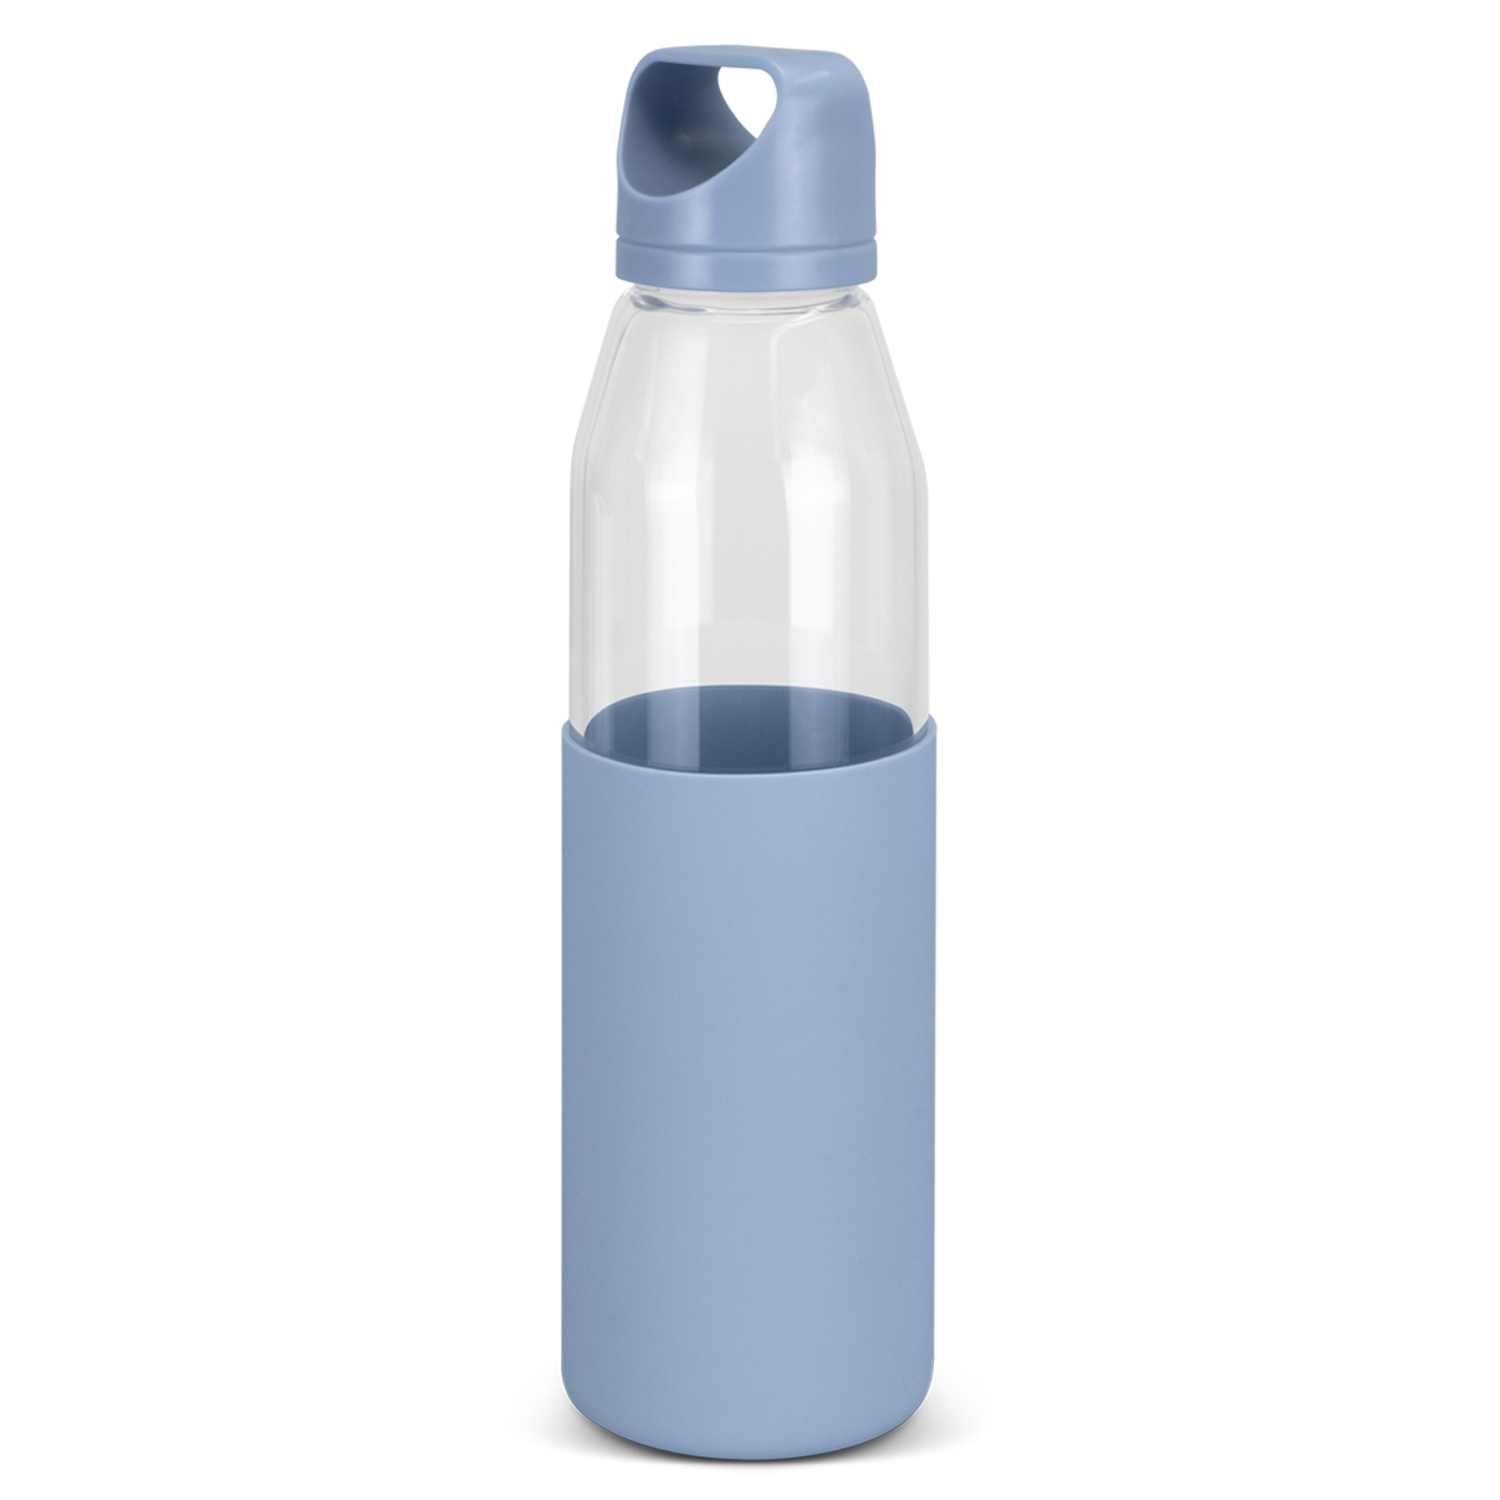 Allure Glass Bottle 124972 | Pale Blue